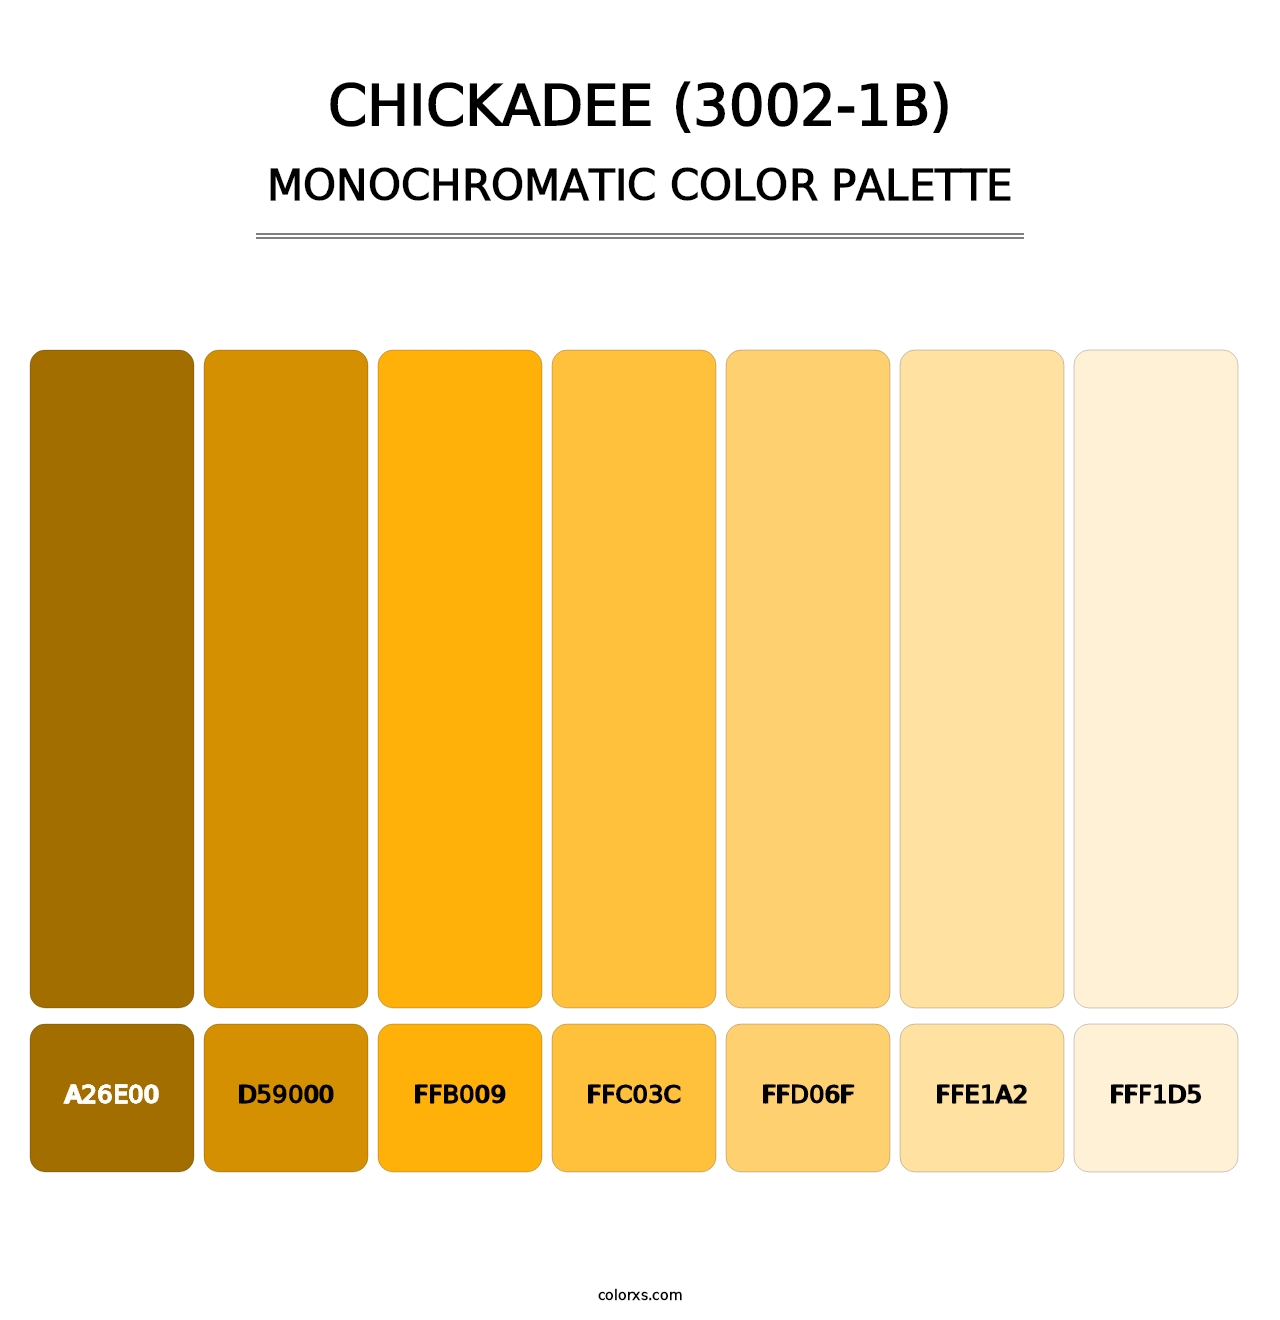 Chickadee (3002-1B) - Monochromatic Color Palette